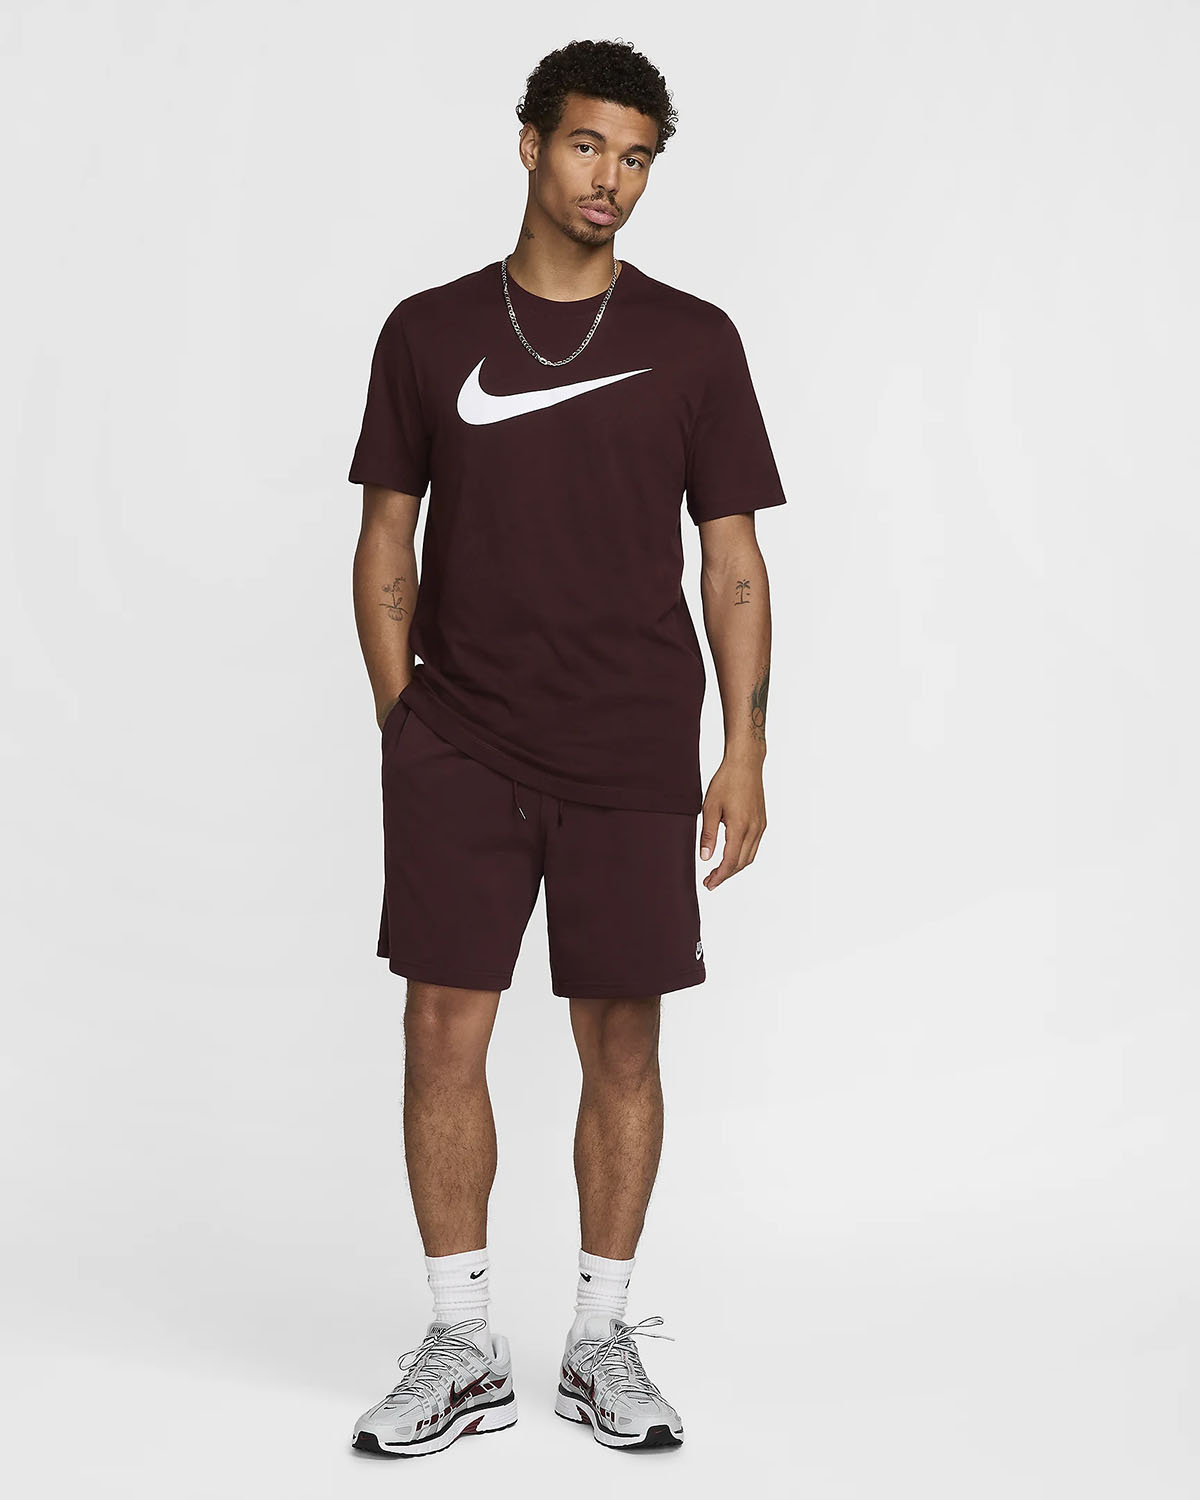 Nike Sportswear Swoosh T Shirt Burgundy Crush Sneaker Outfit